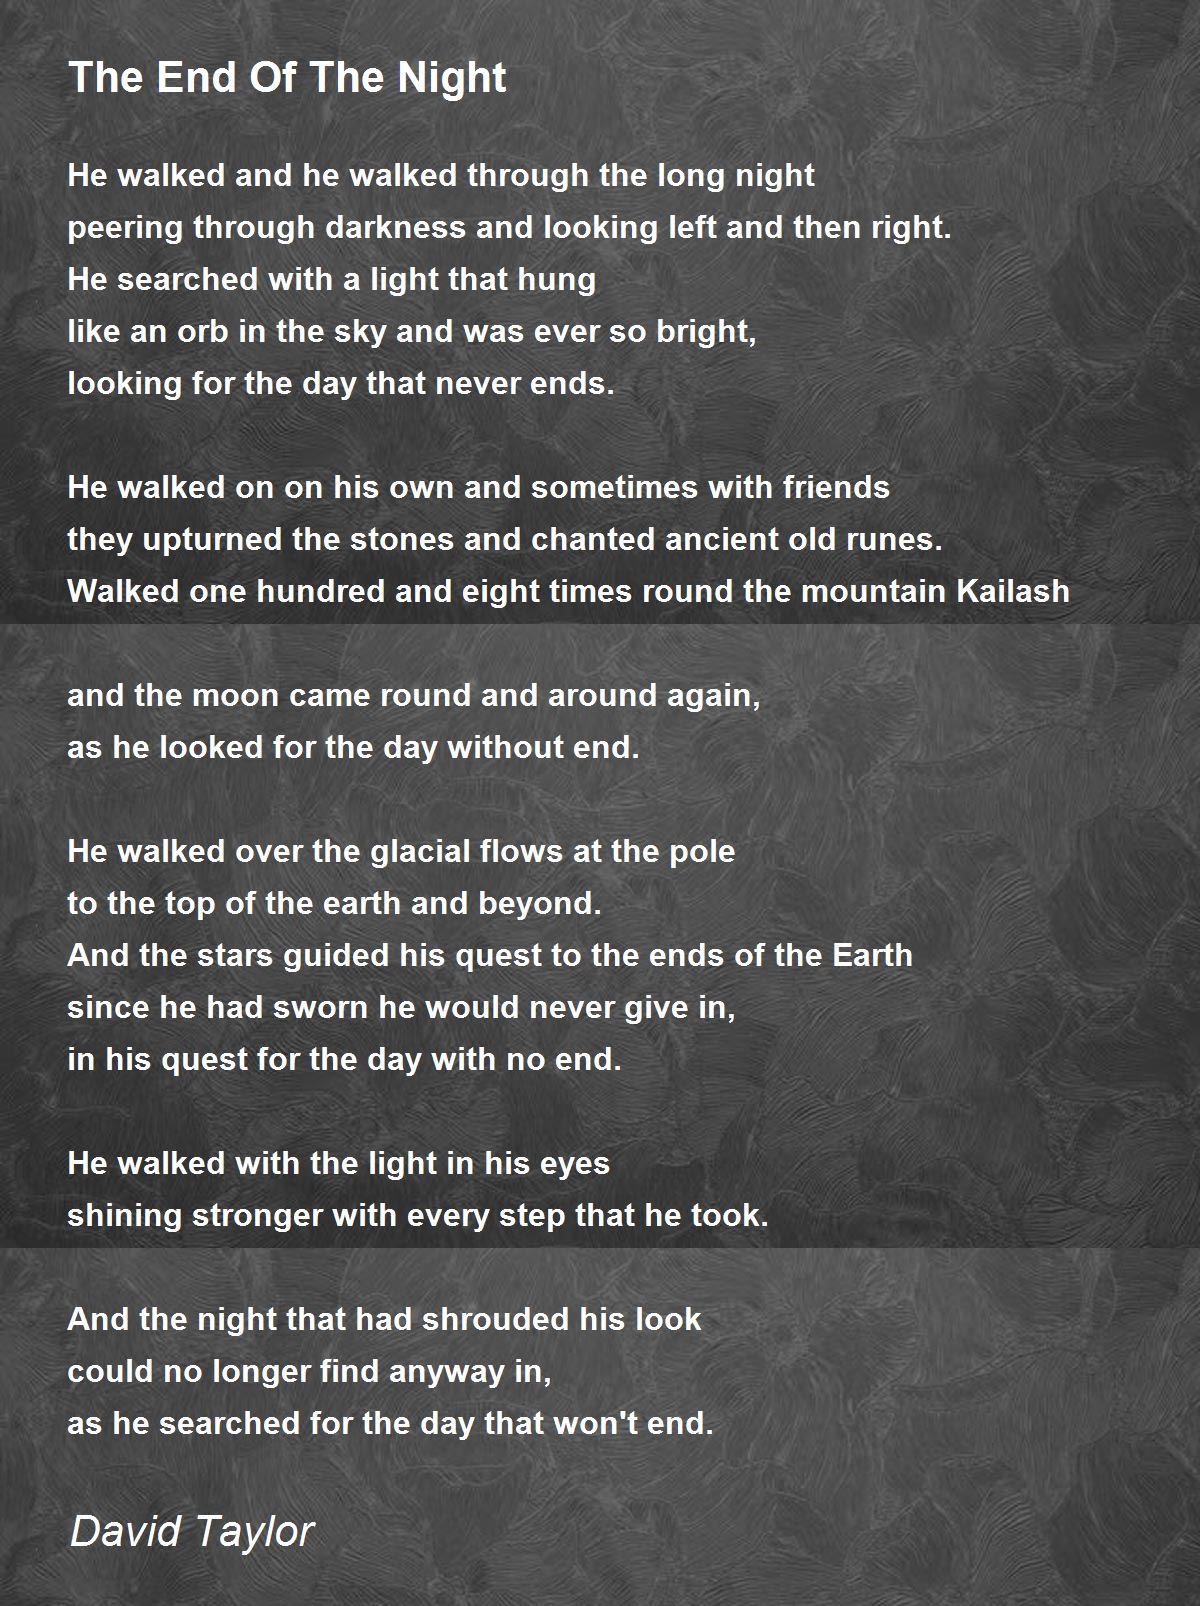 The End Of The Night - The End Of The Night Poem By David Taylor